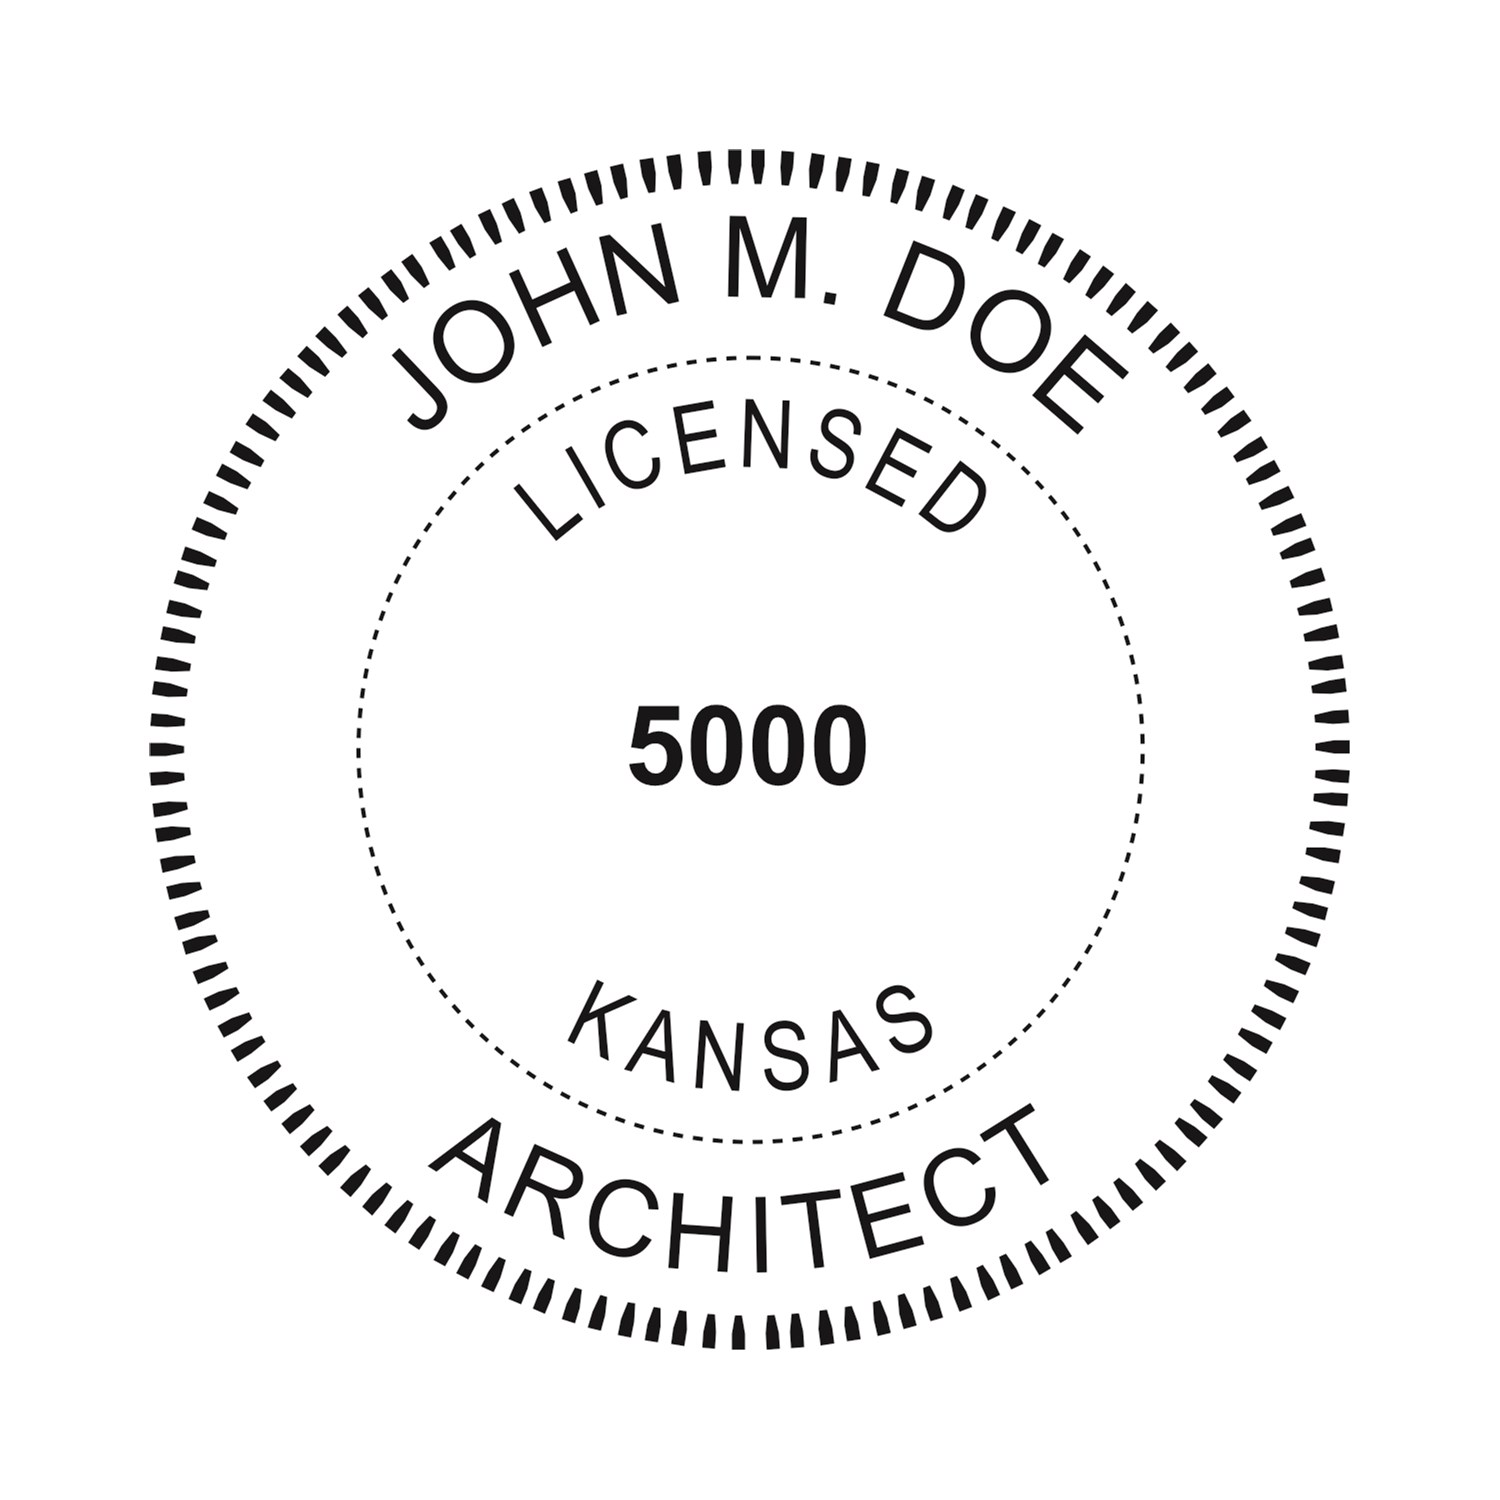 Architect Seal - Pre Inked Stamp - Kansas